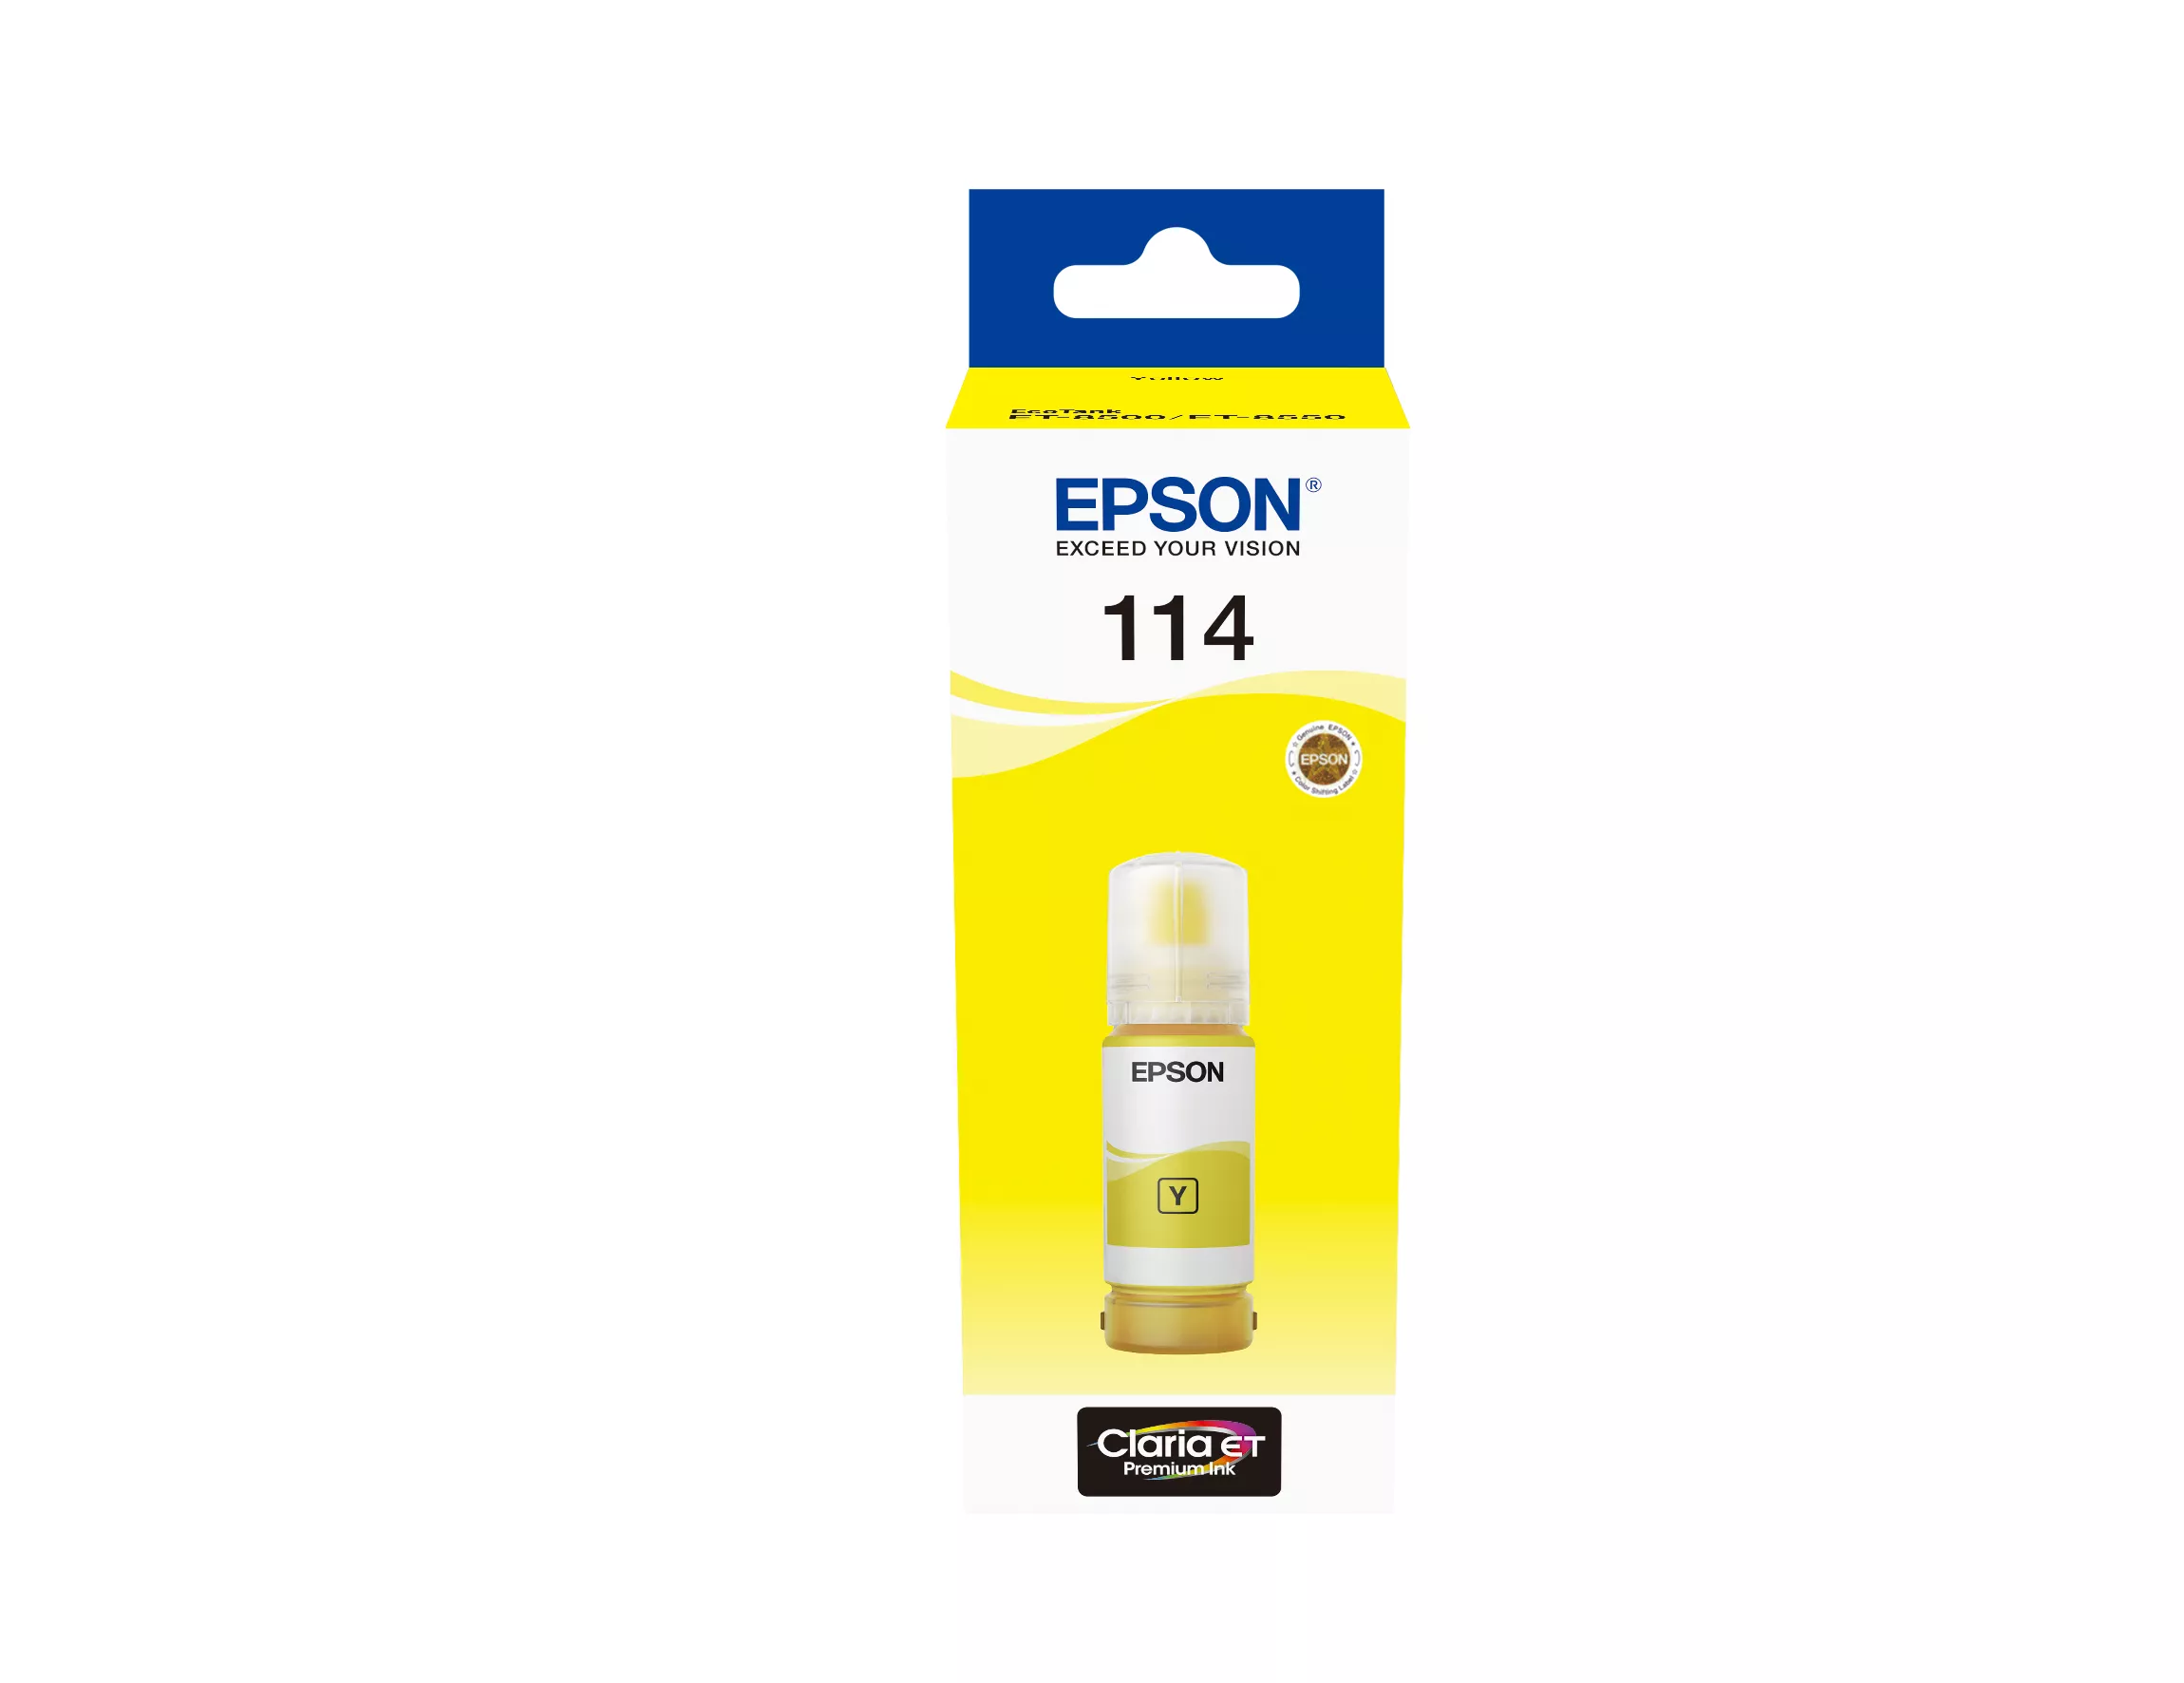 Achat EPSON 114 EcoTank Yellow ink bottle au meilleur prix